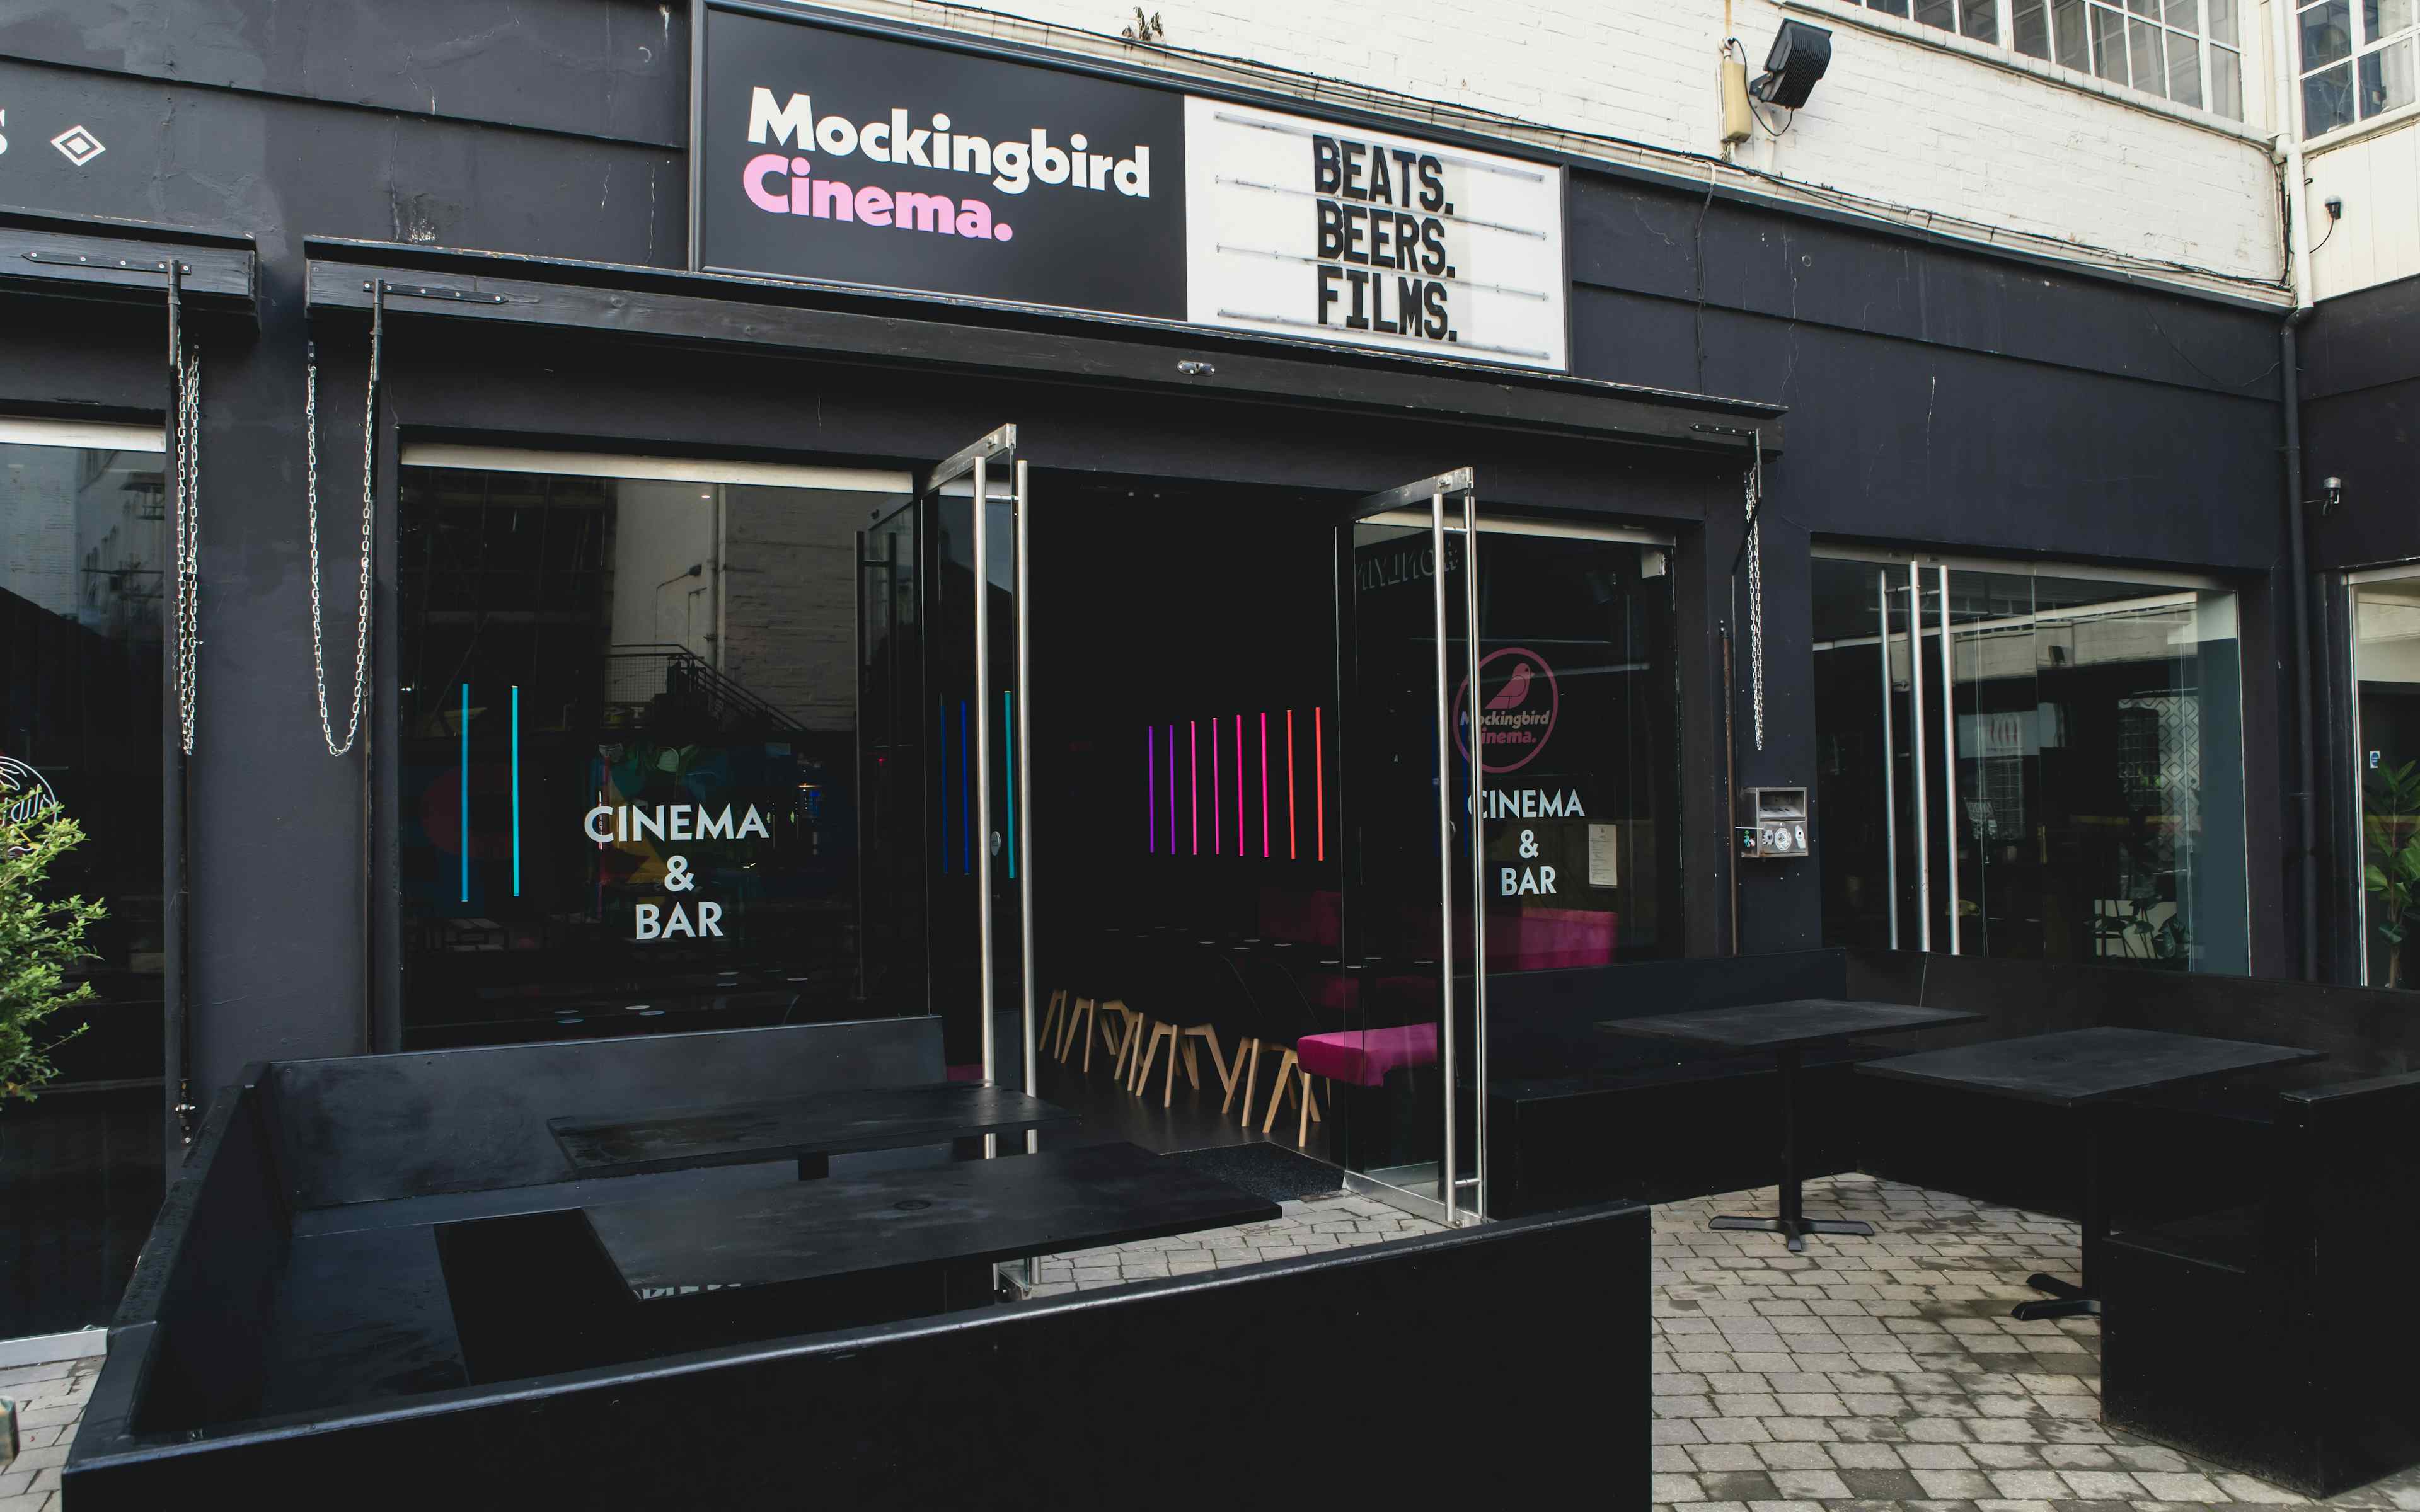 Mockingbird Cinema Bar - image